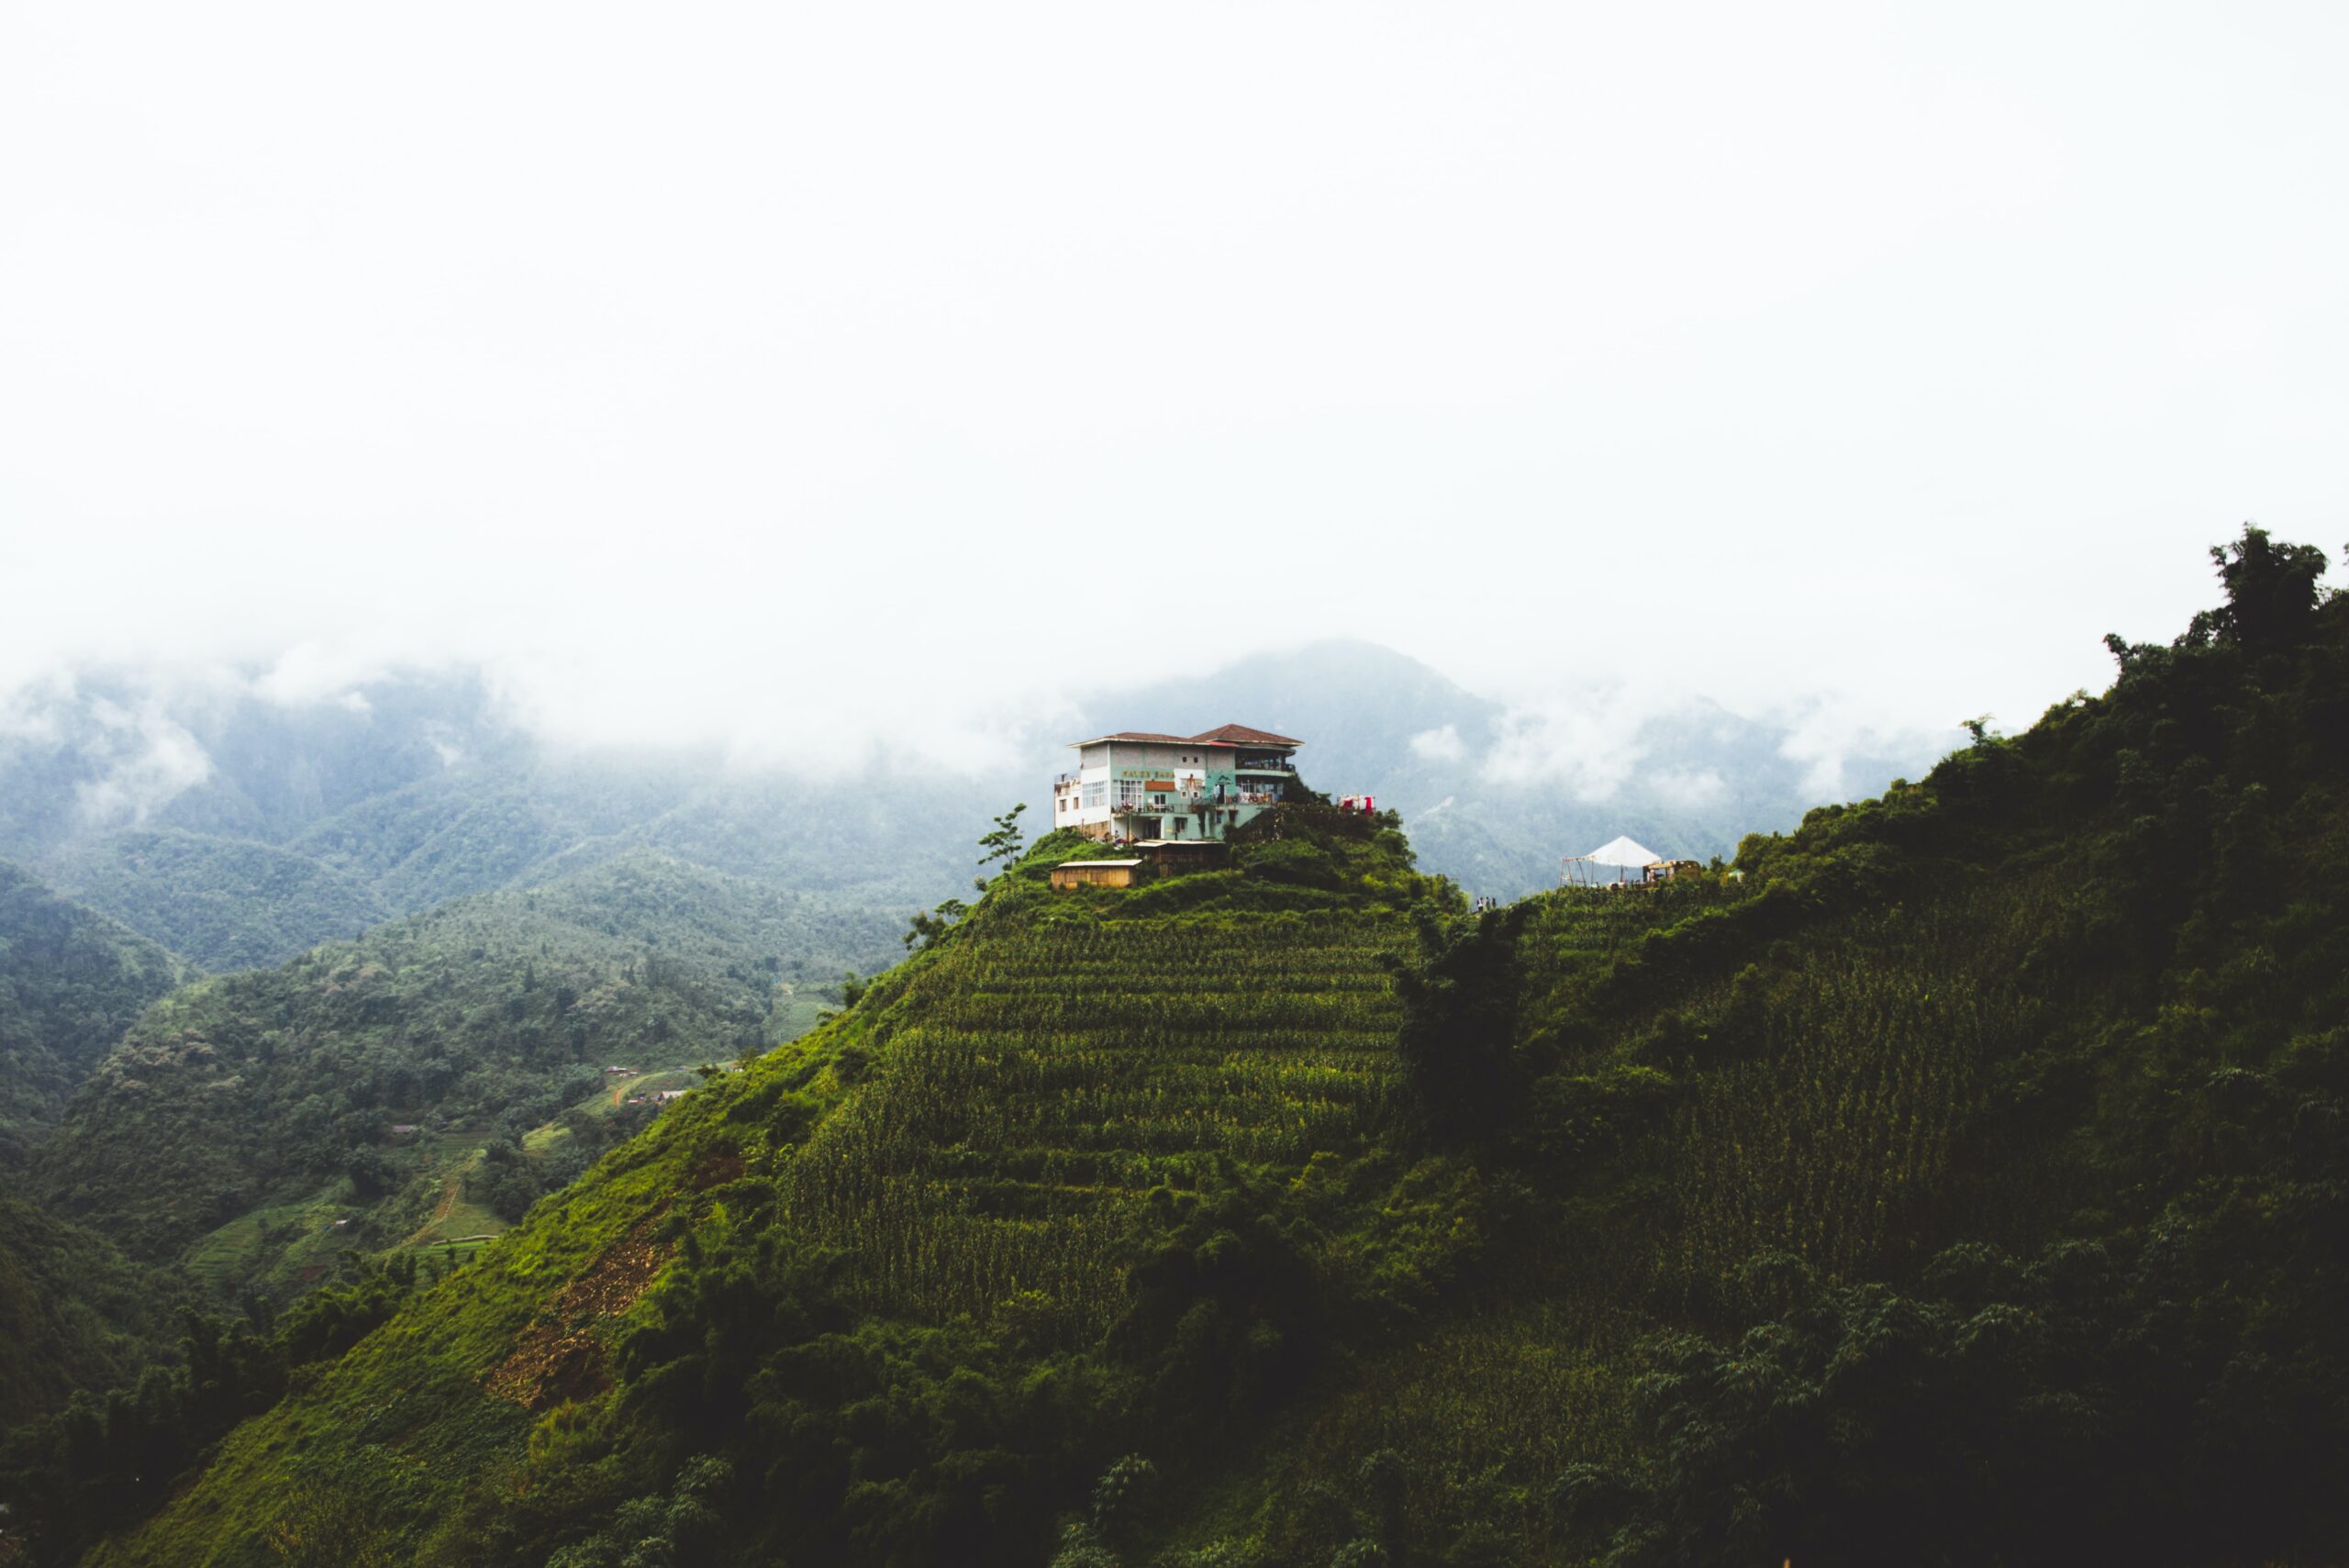 A house on top of a Vietnamese mountain